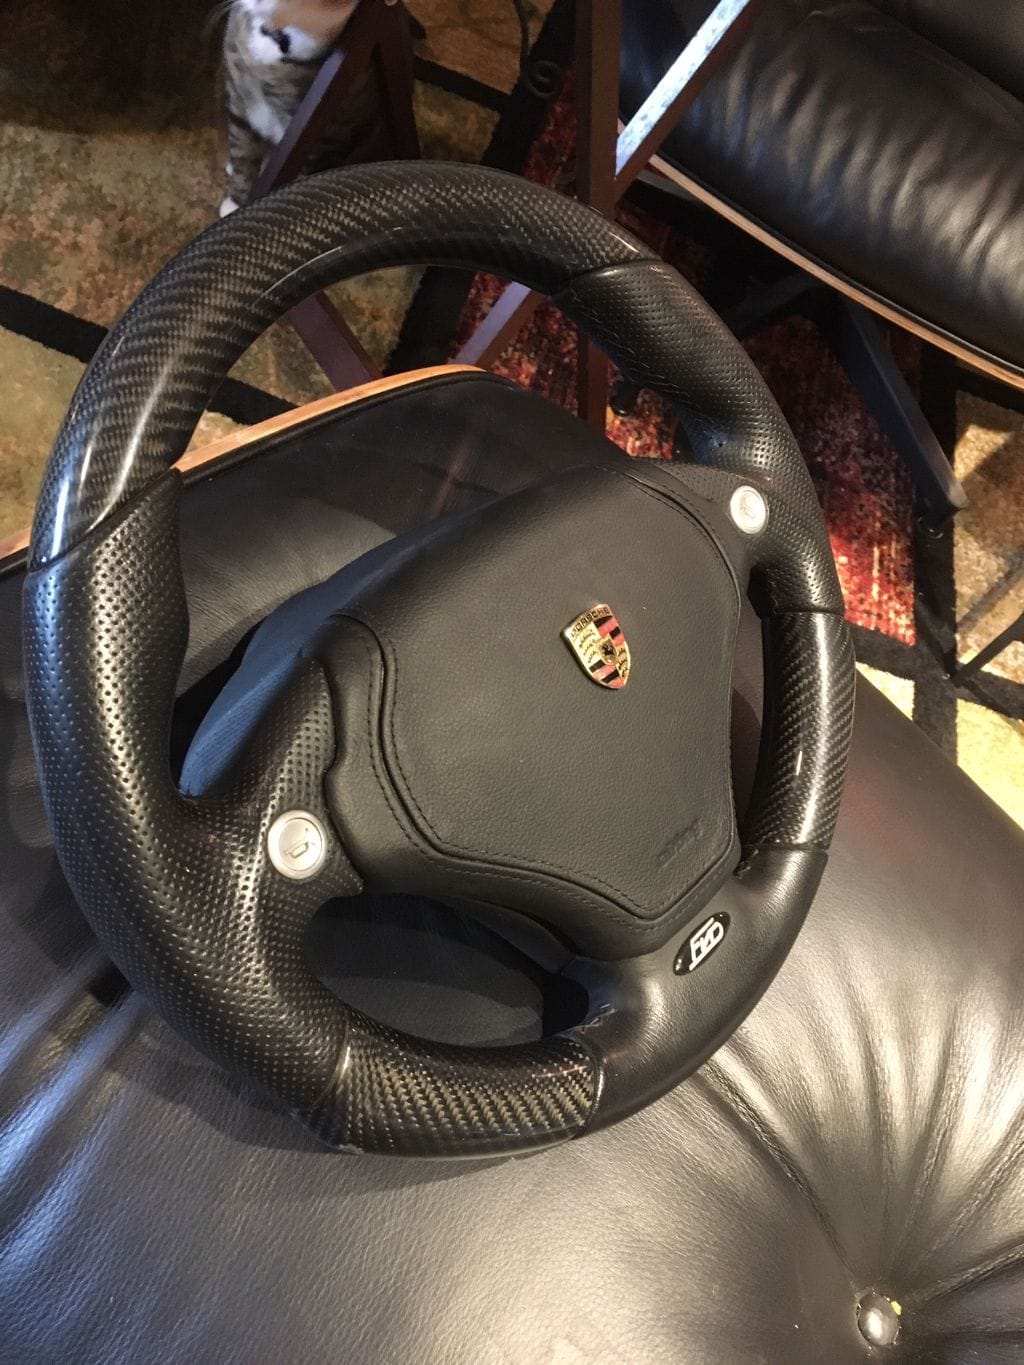 Accessories - FS: Porsche FVD German carbon fiber airbag steering wheel & shift knob - $2000 - Used - 1999 to 2004 Porsche 911 - Wheat Ridge, CO 80033, United States